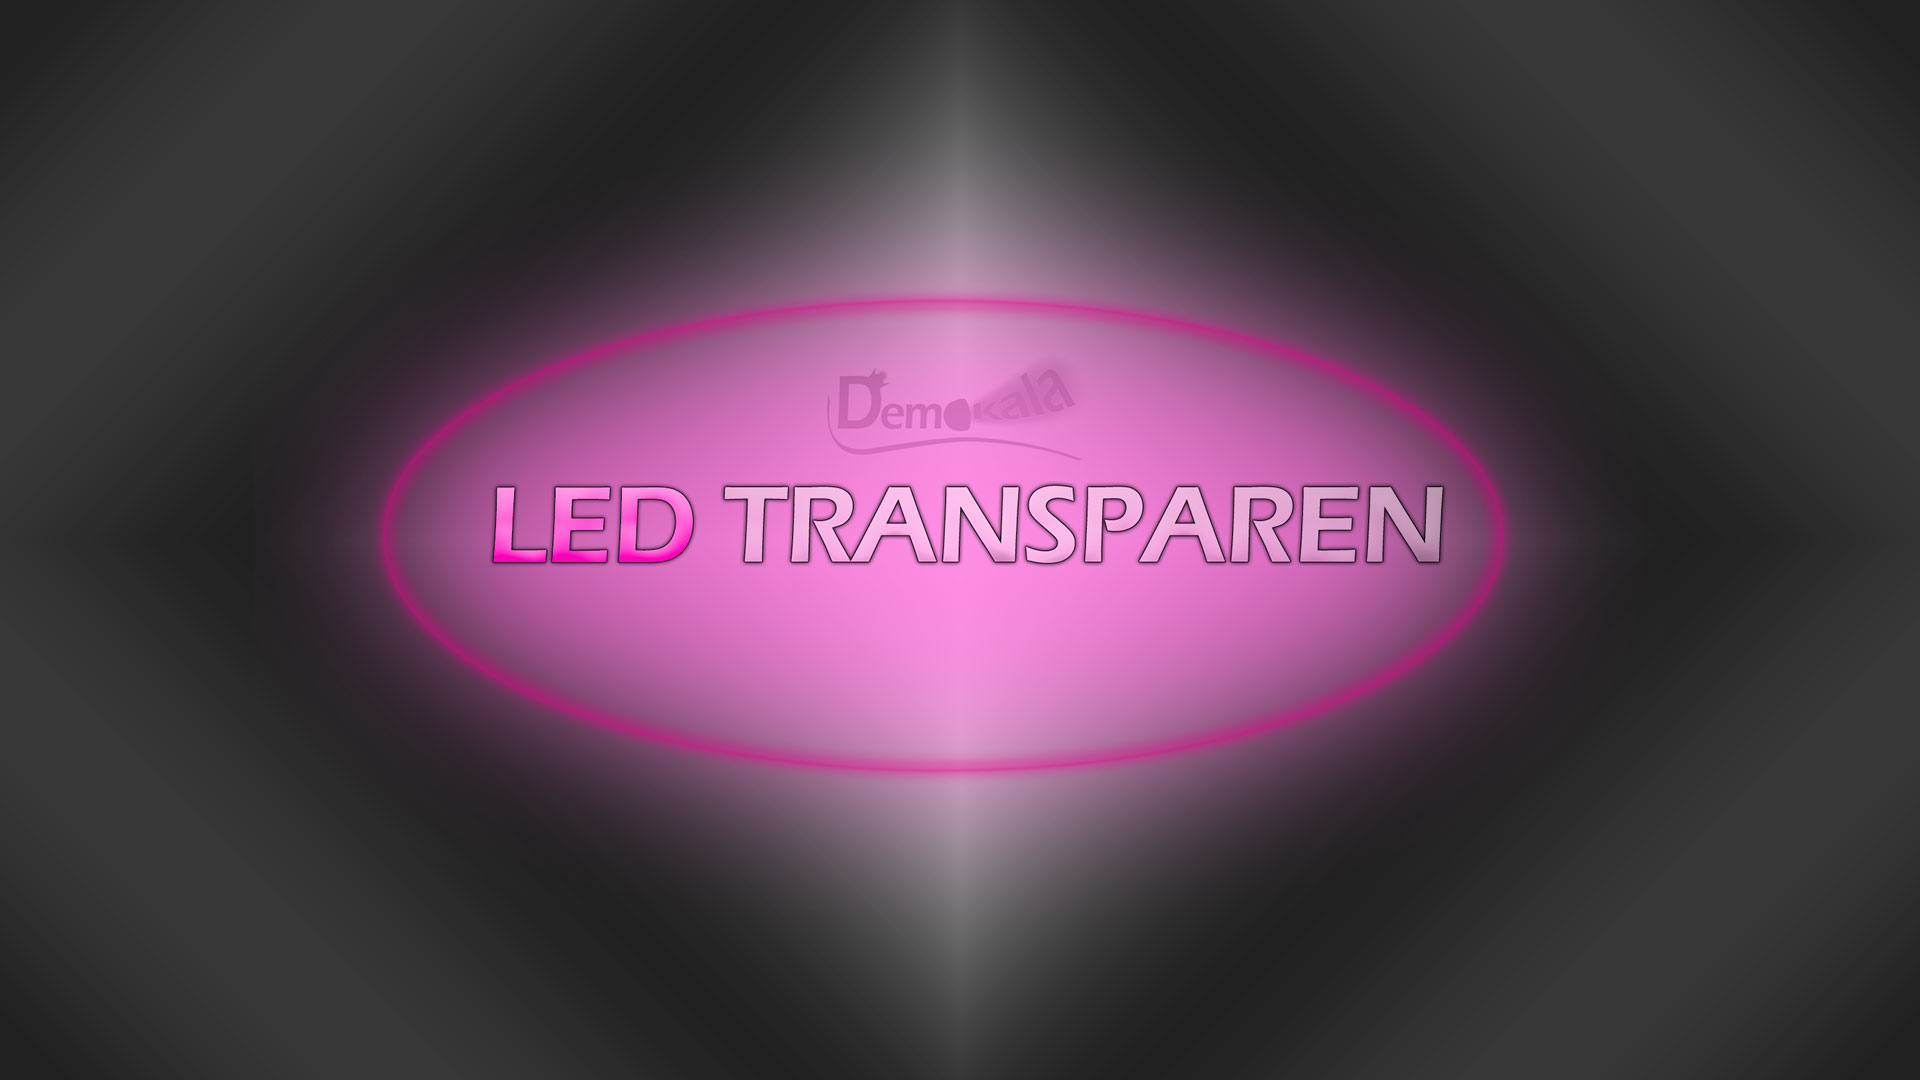 LED TRANSPARENT